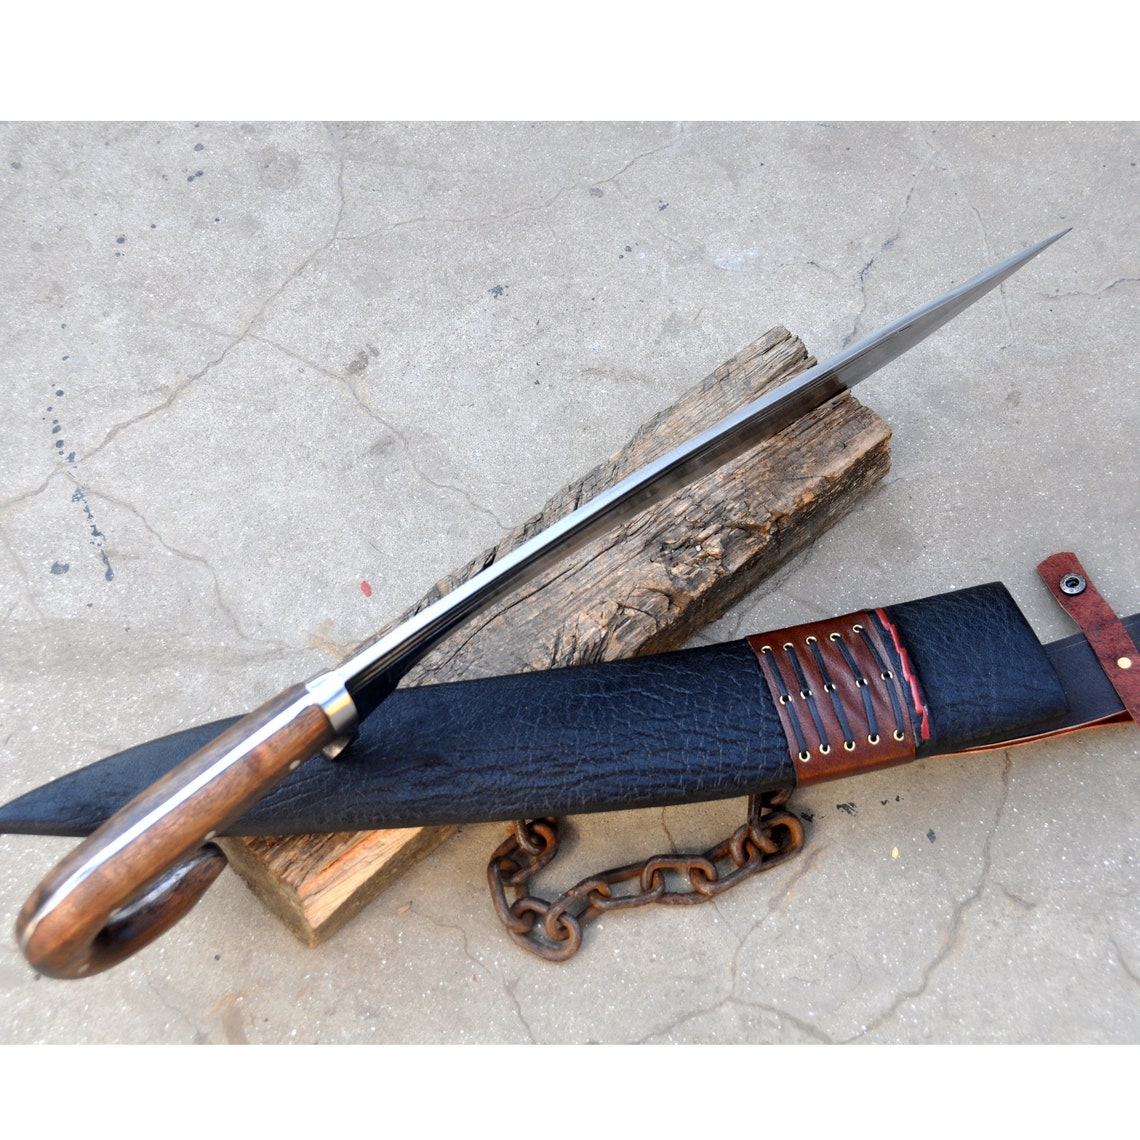 Everestforge 21 Inches Blade Kopis Sword Handmade Traditional Etsy